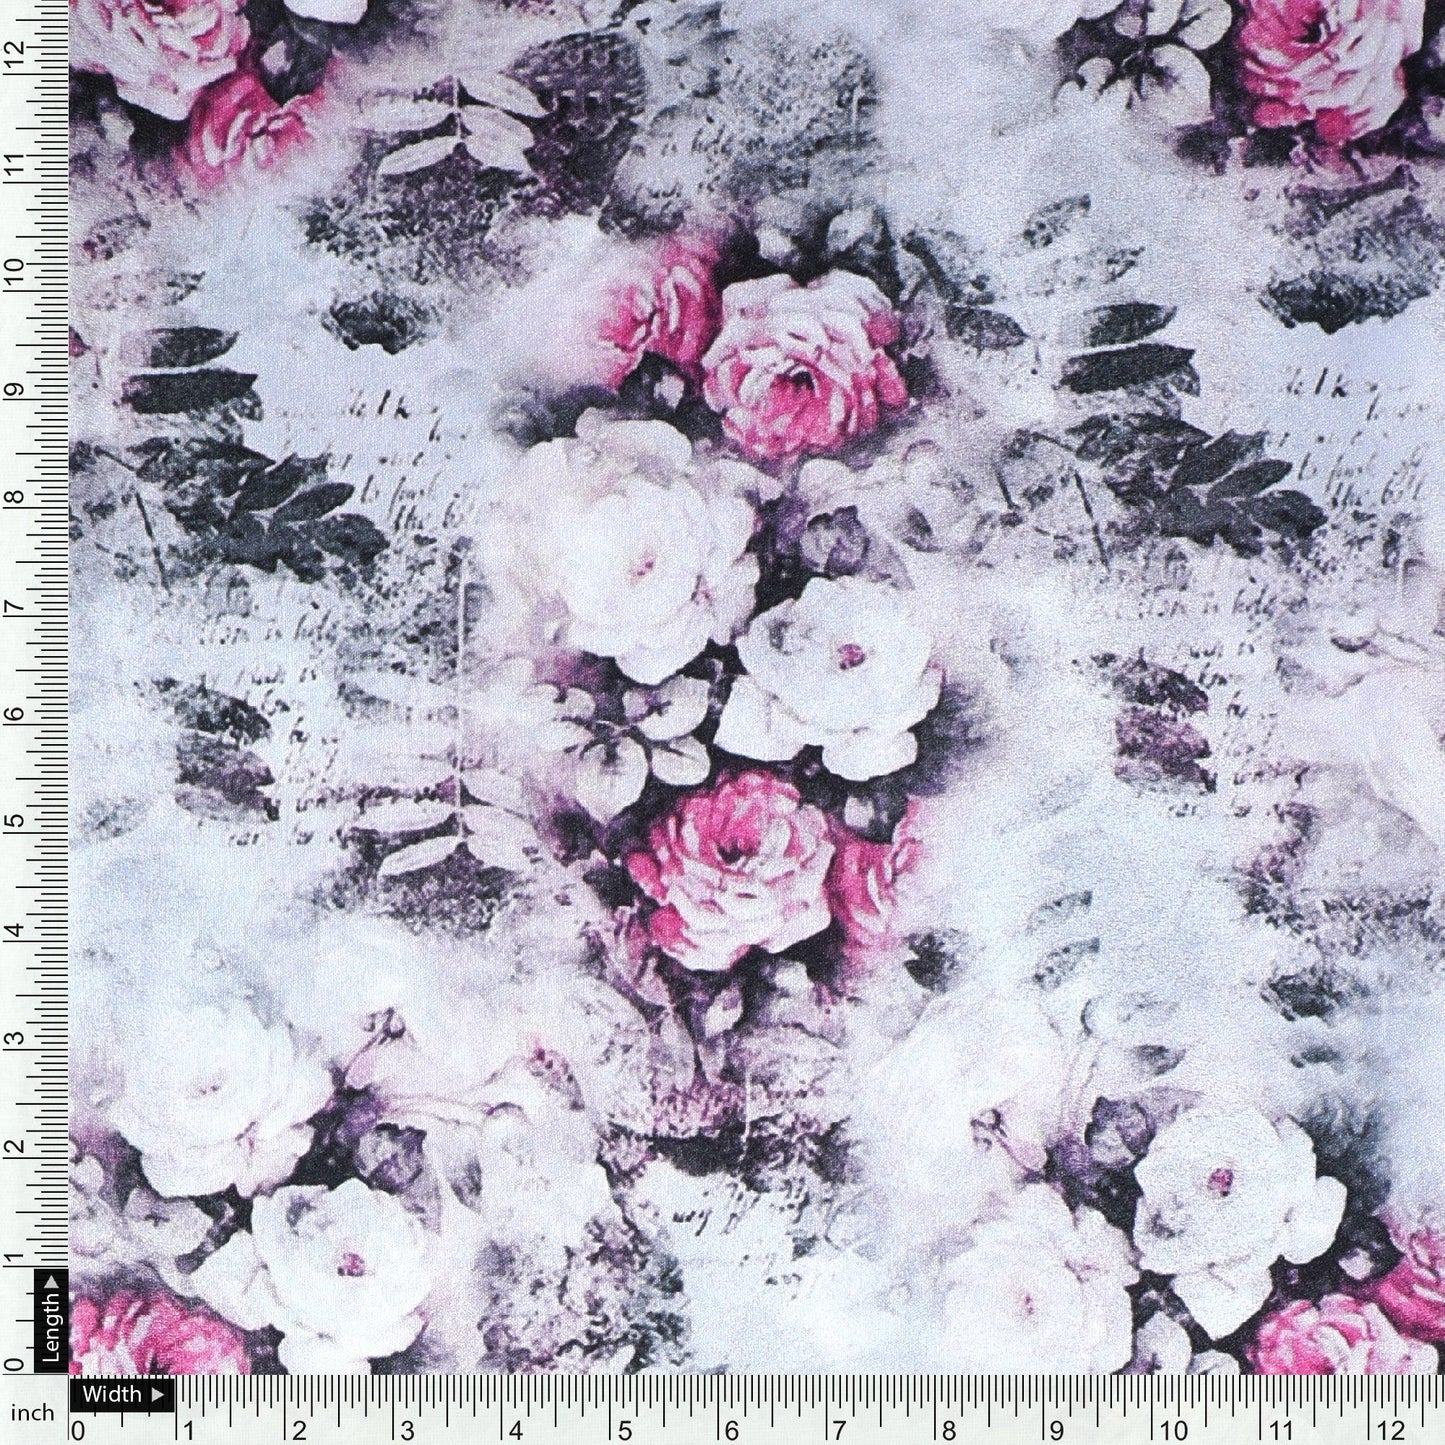 Vintage Floral Art Collection Digital Printed Fabric - Silk Crepe - FAB VOGUE Studio®